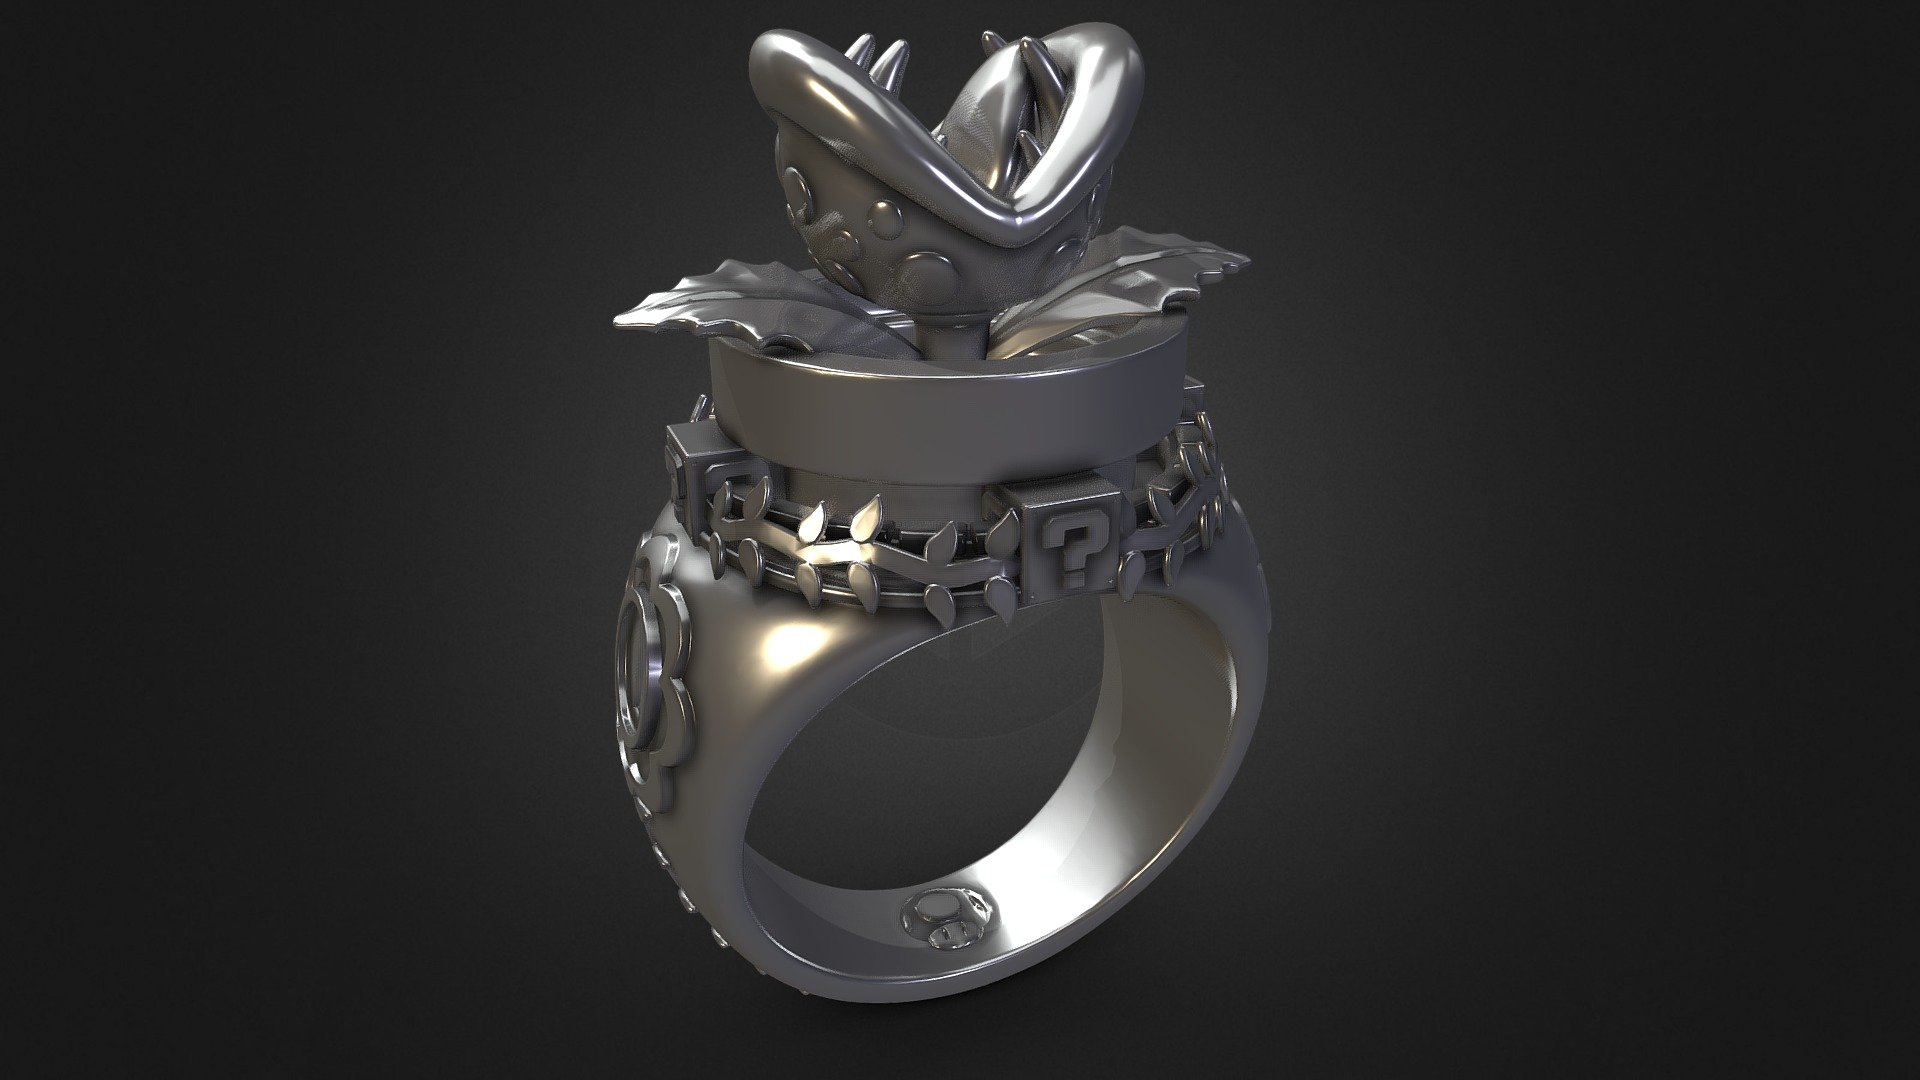 Mario bros inspired ring - Mario flower ring - 3D model by zerojs 3d model